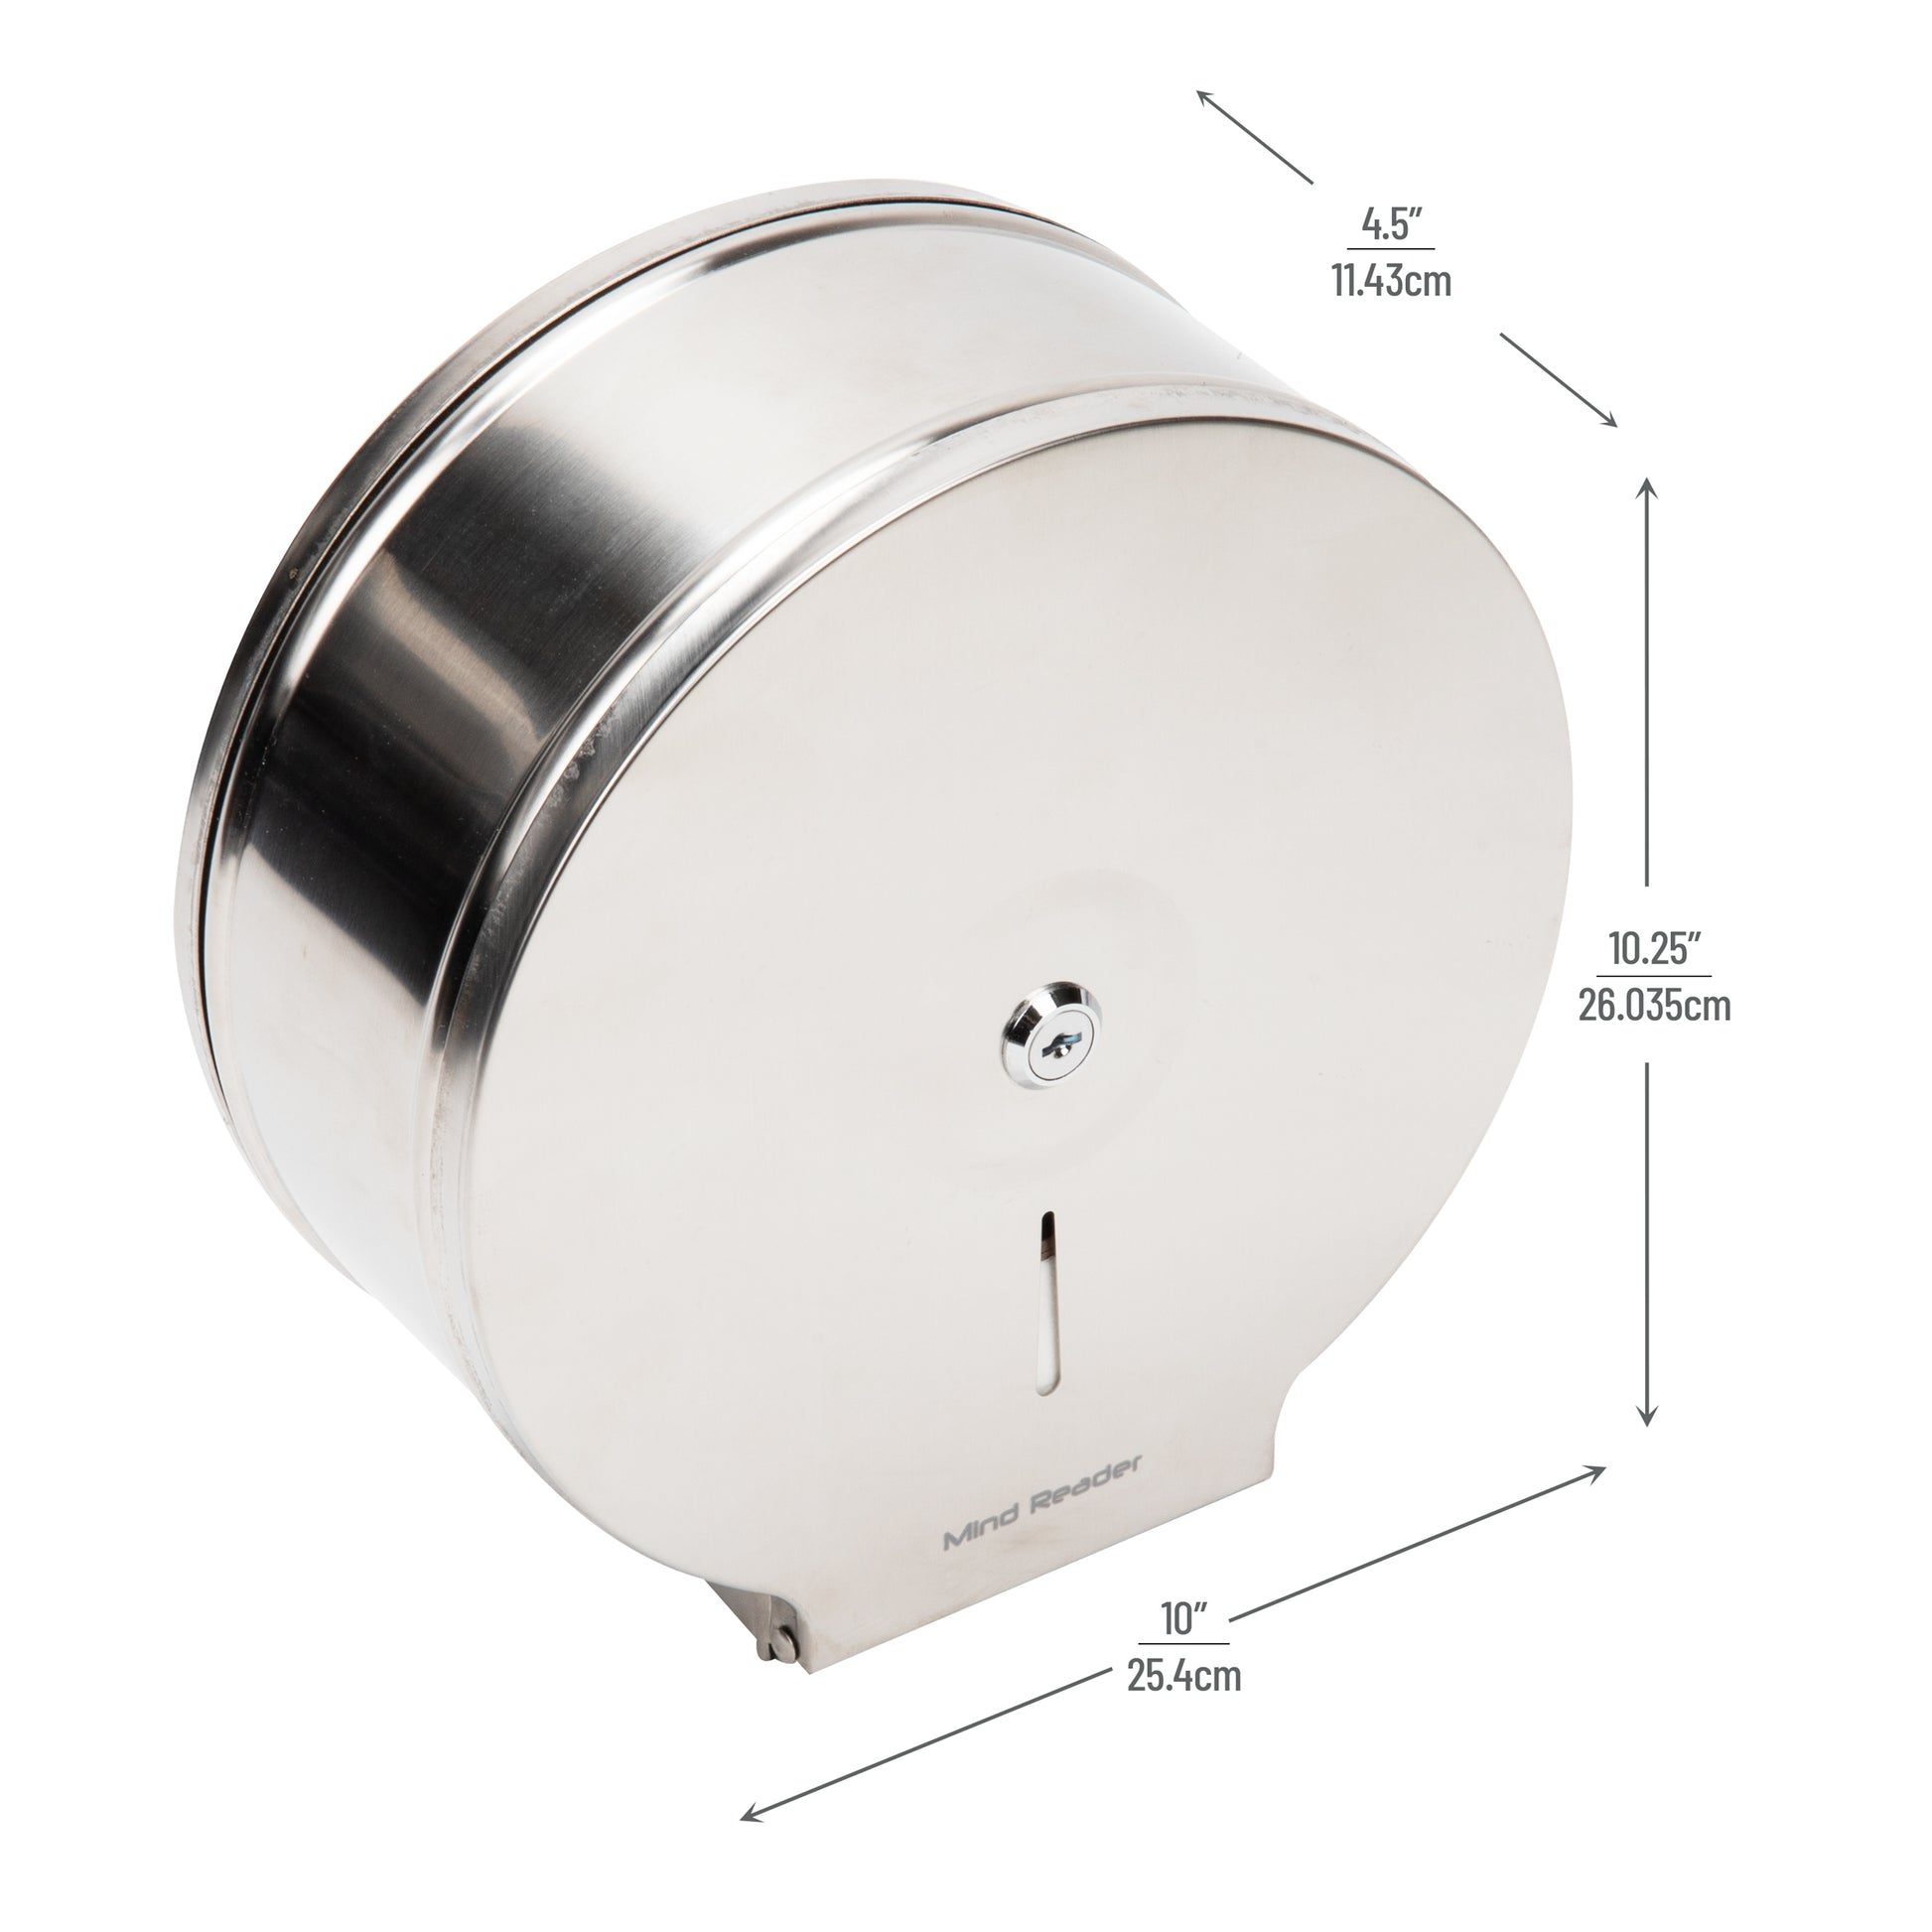 MSN 60 - Toilet roll dispenser - byCOCOON